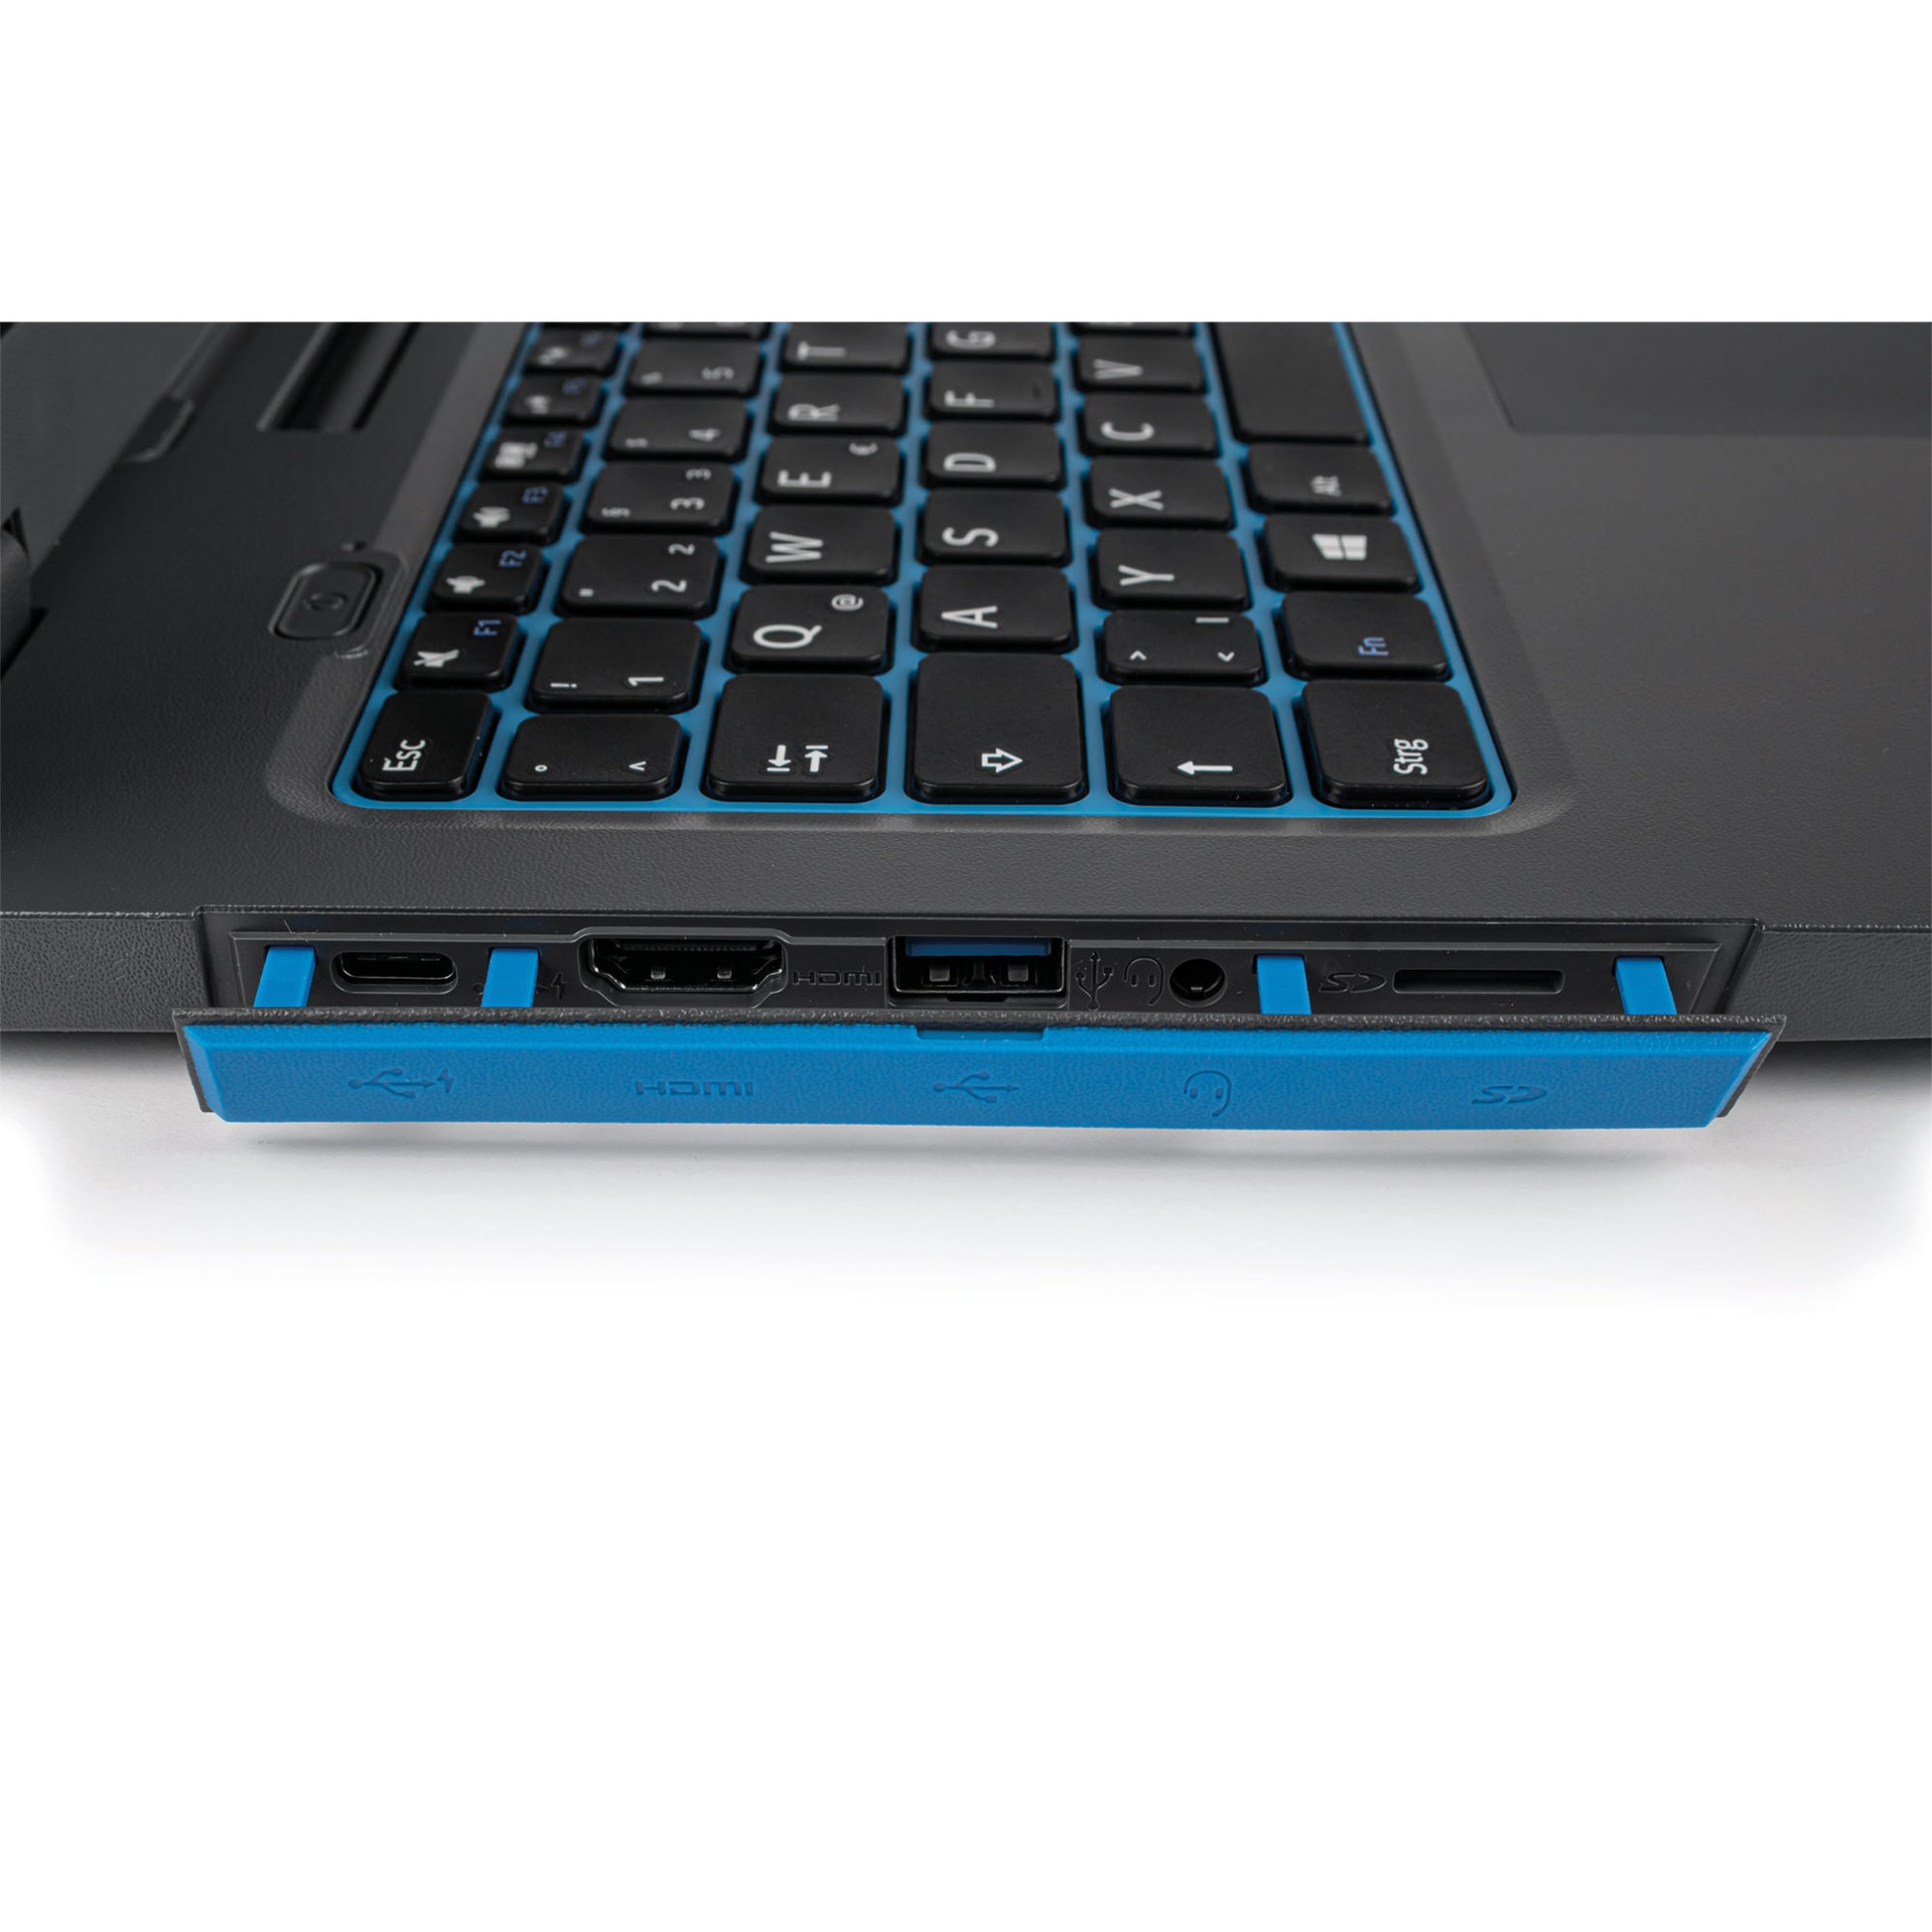 Bild der Anschlüsse des Amplio 6 laptops - USB-C, HDMI, USB 3.0, AUX, SD